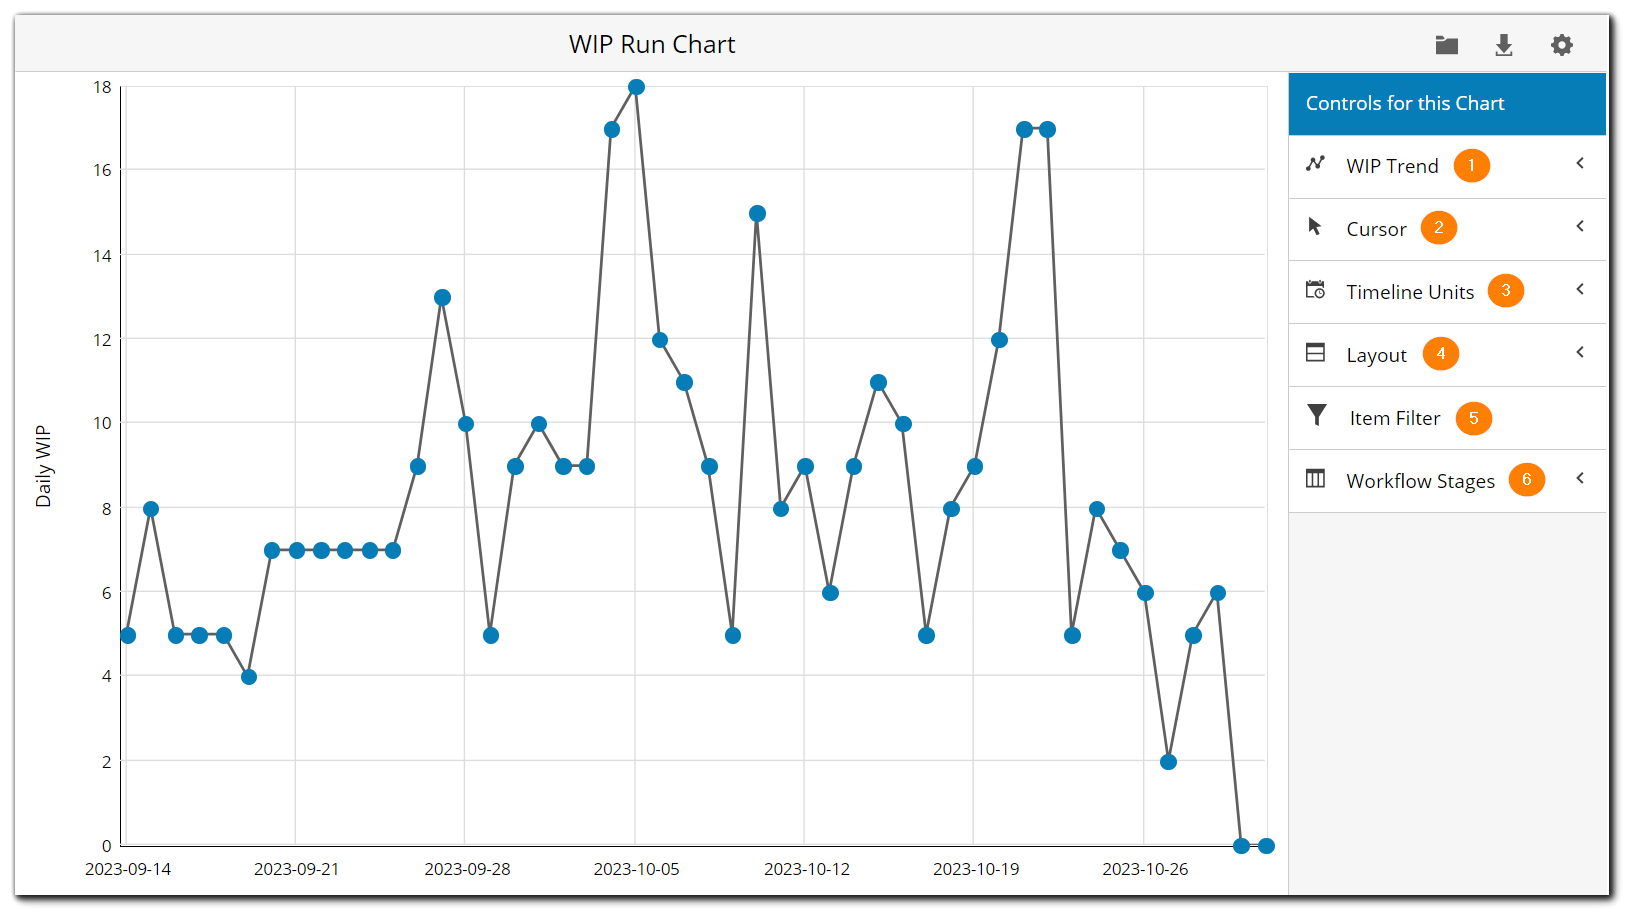 wip-run-chart-controls.png